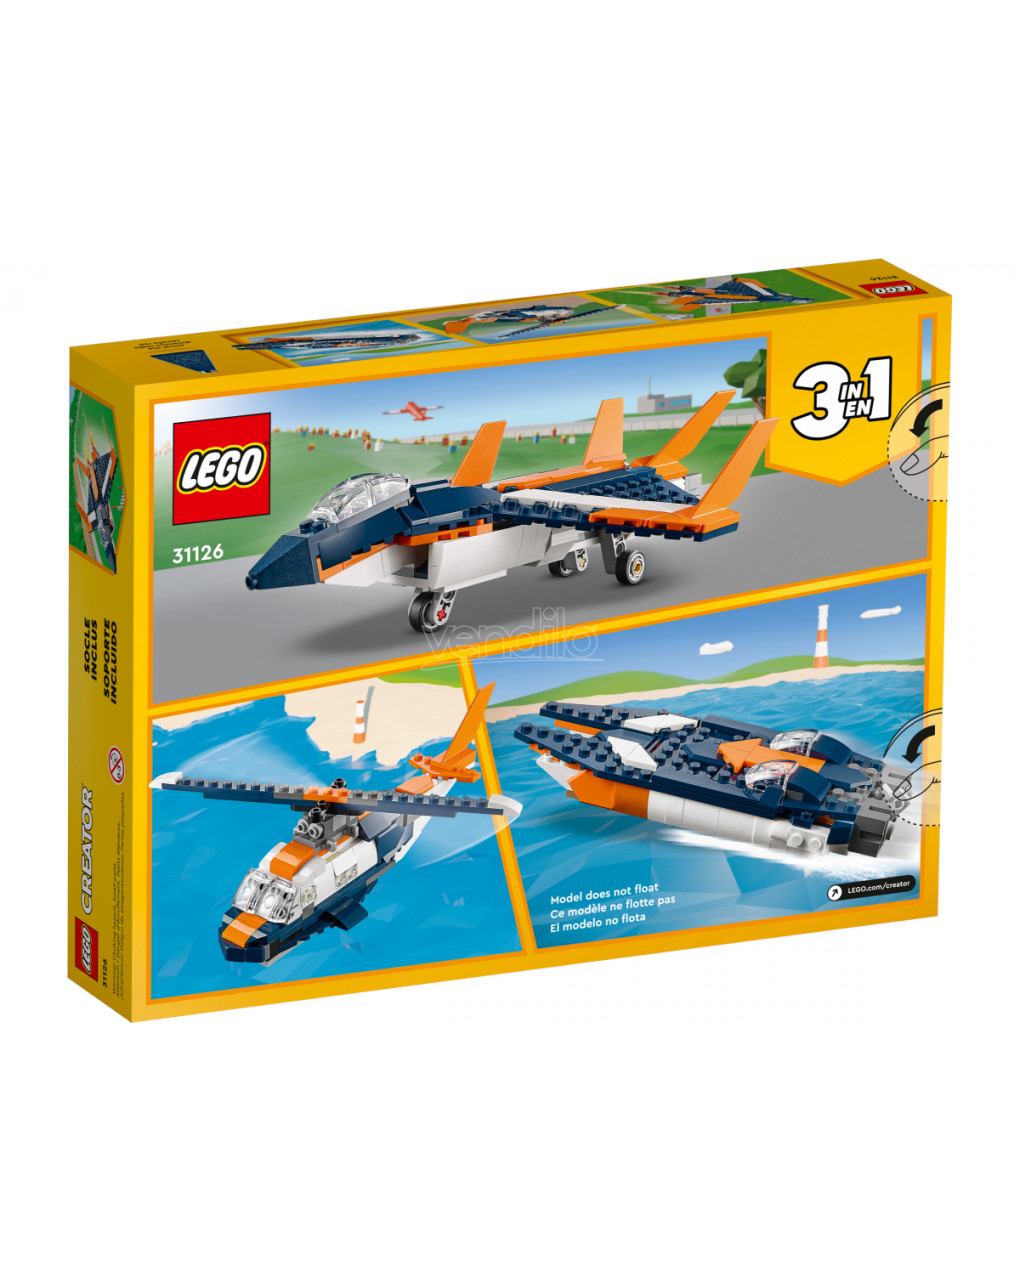 Lego creator - jacto supersónico - 31126 - LEGO